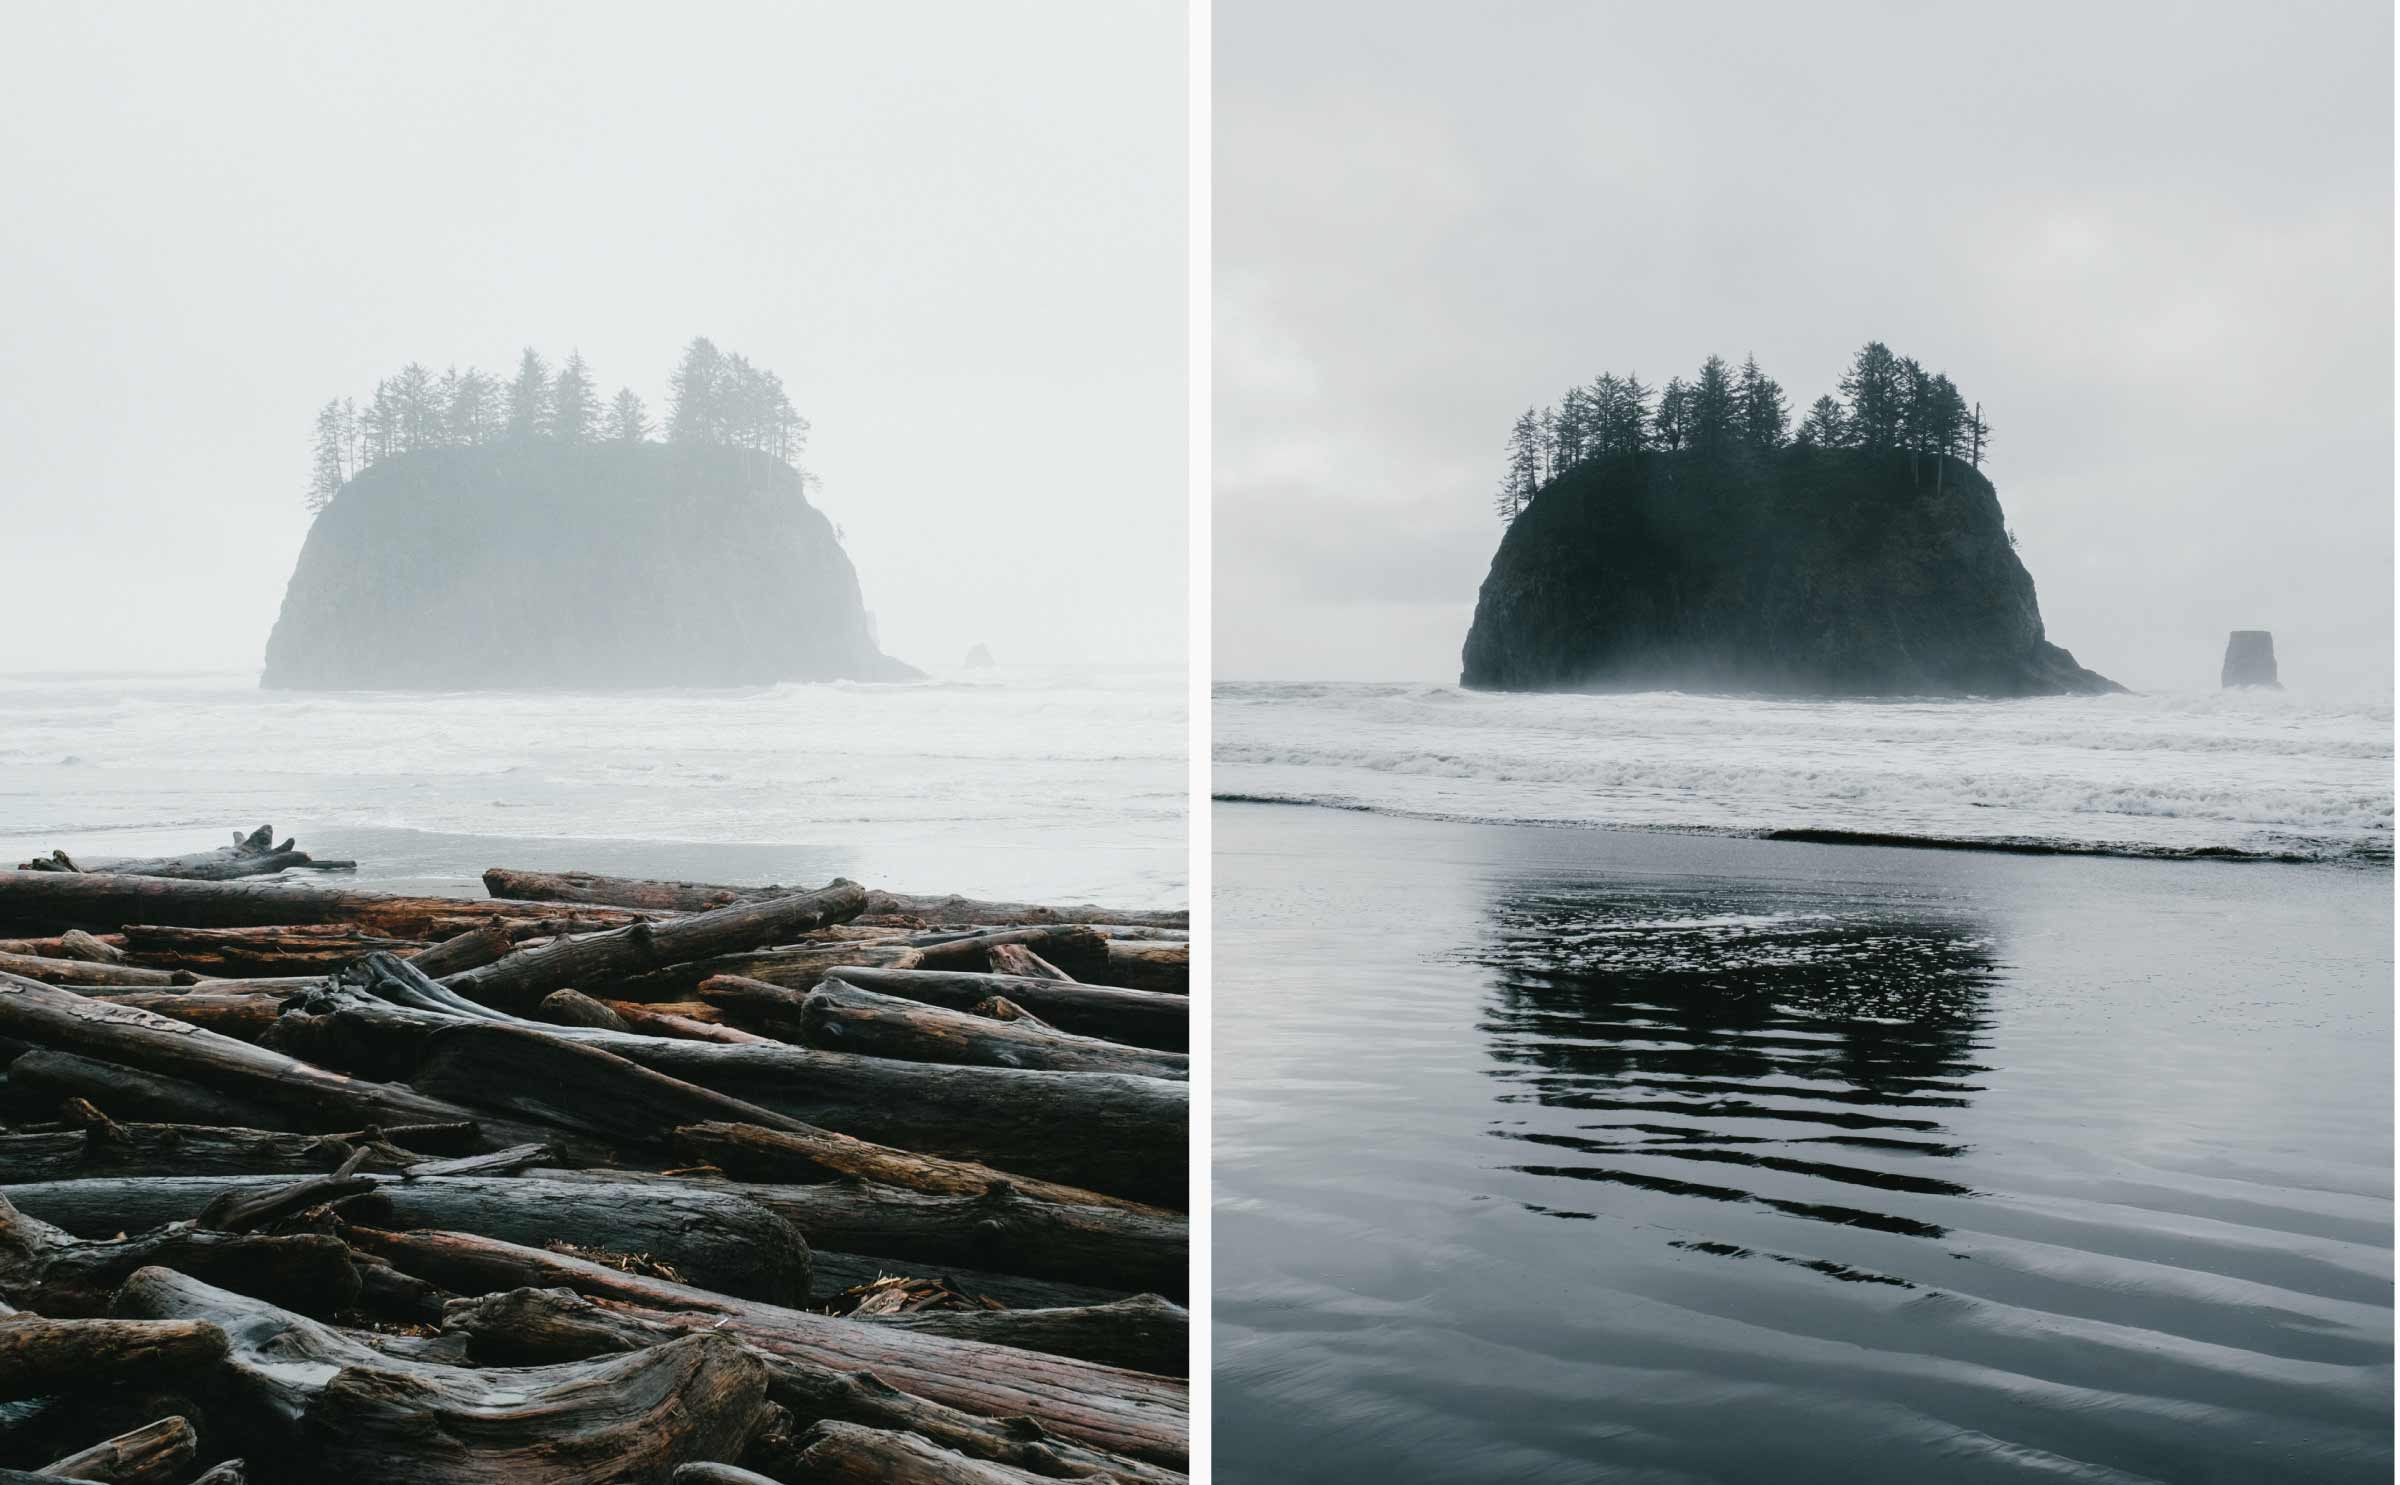 Sea stacks on the coast of Washington